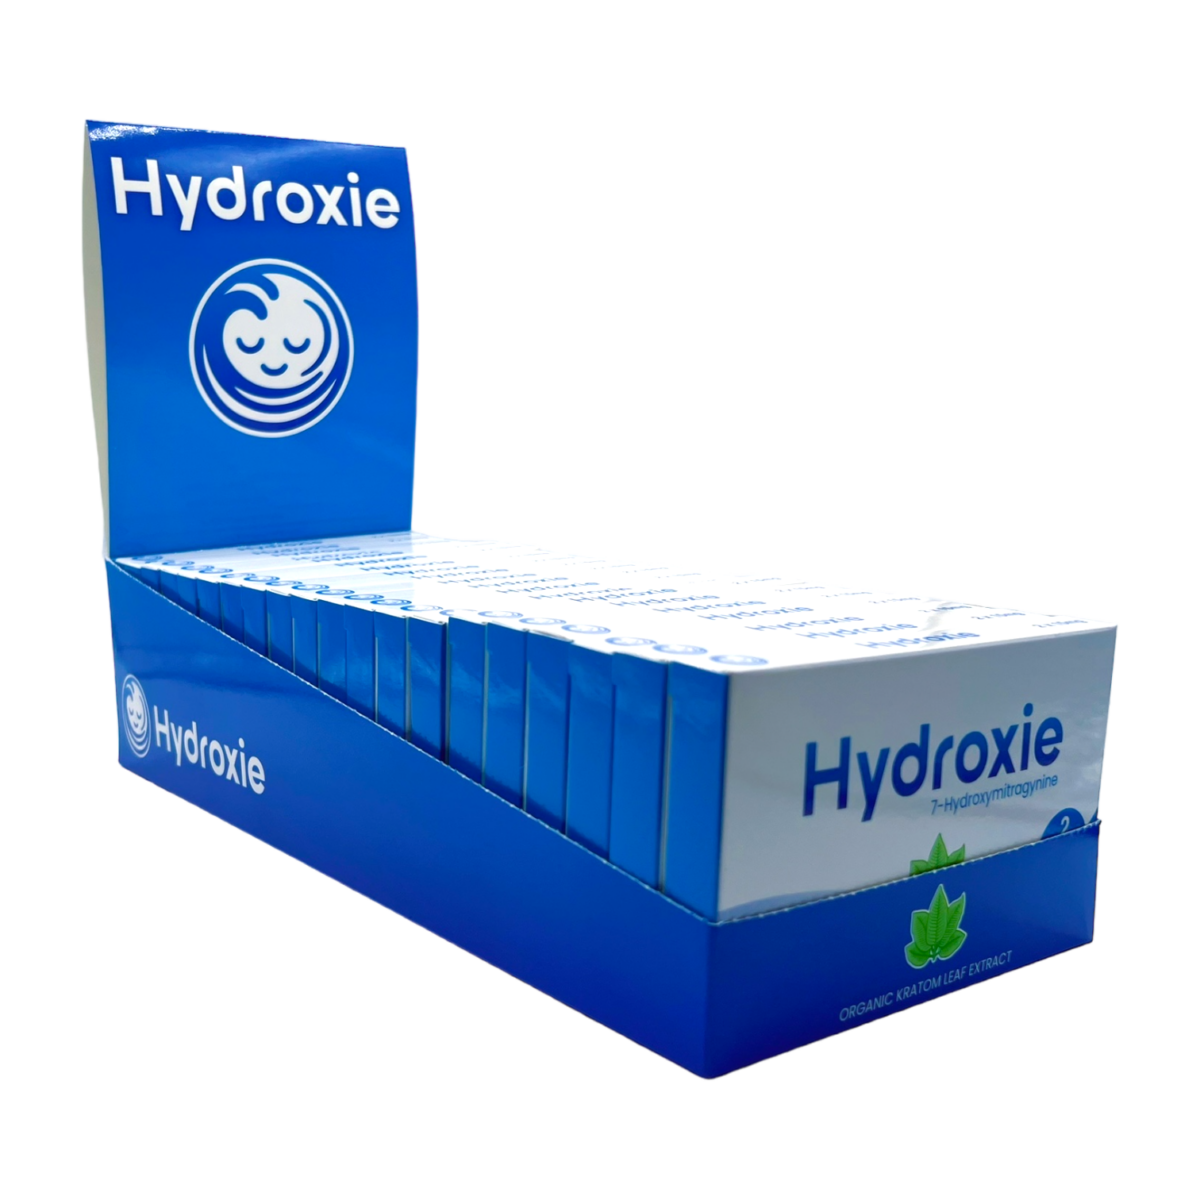 Hydroxie 15mg 7-OH Chewable Kratom Tablets